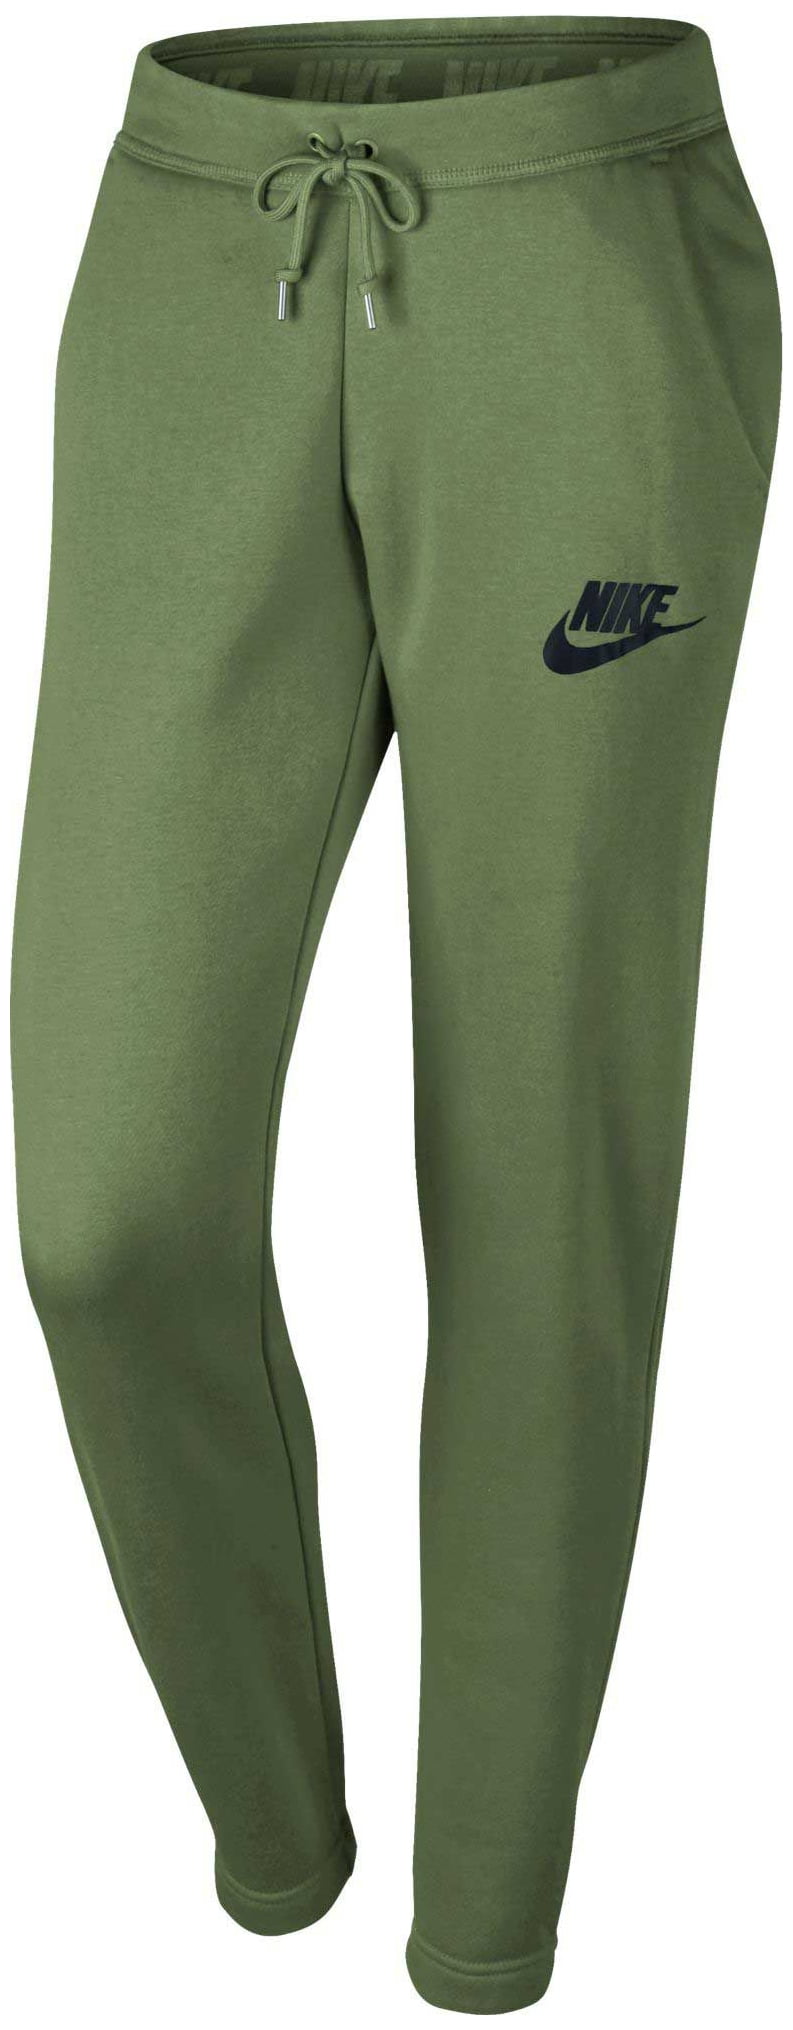 green nike sweatpants